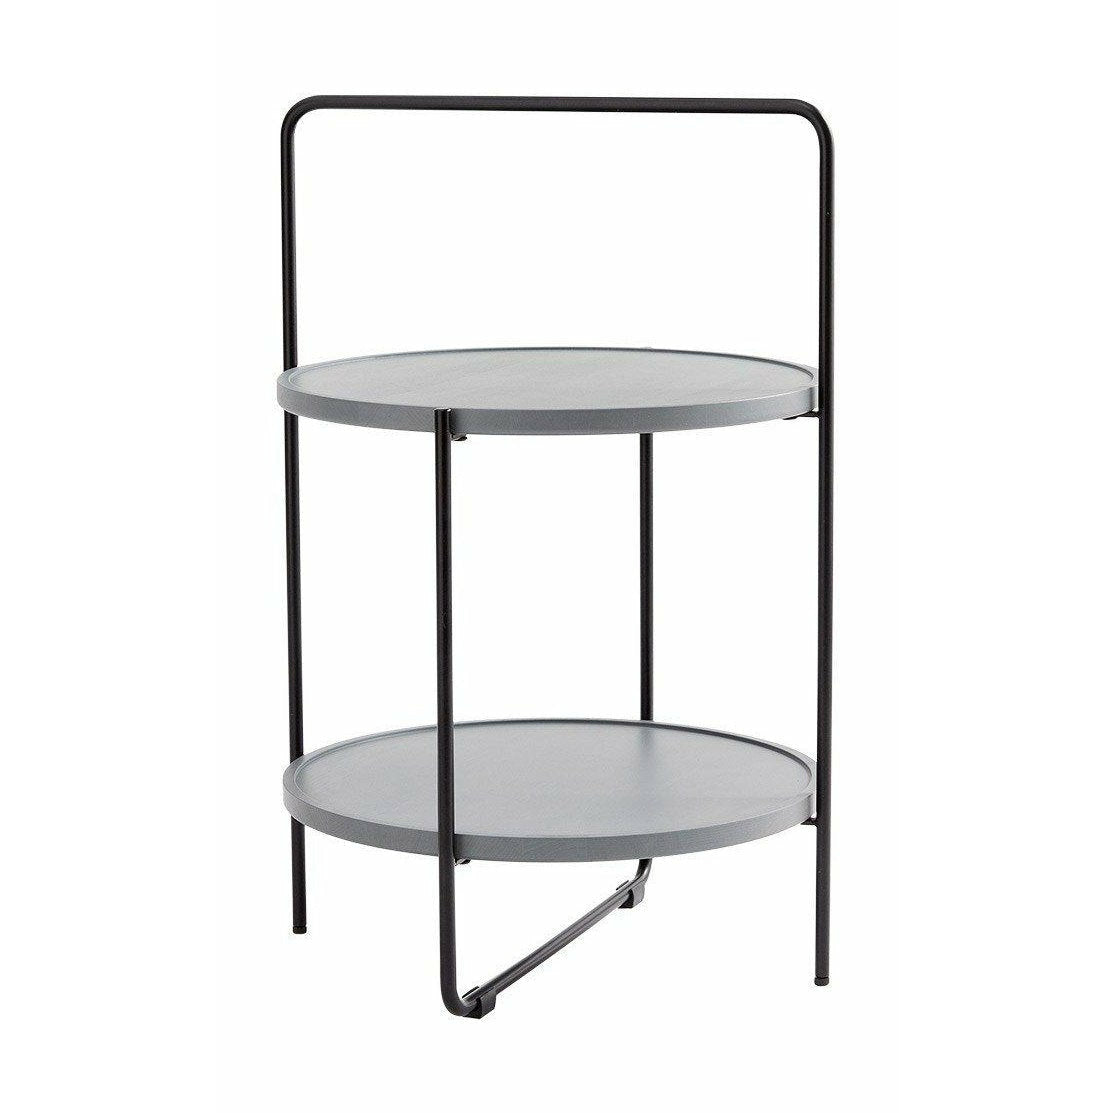 Table d'appoint Andersen Furniture, gris, Ø46cm